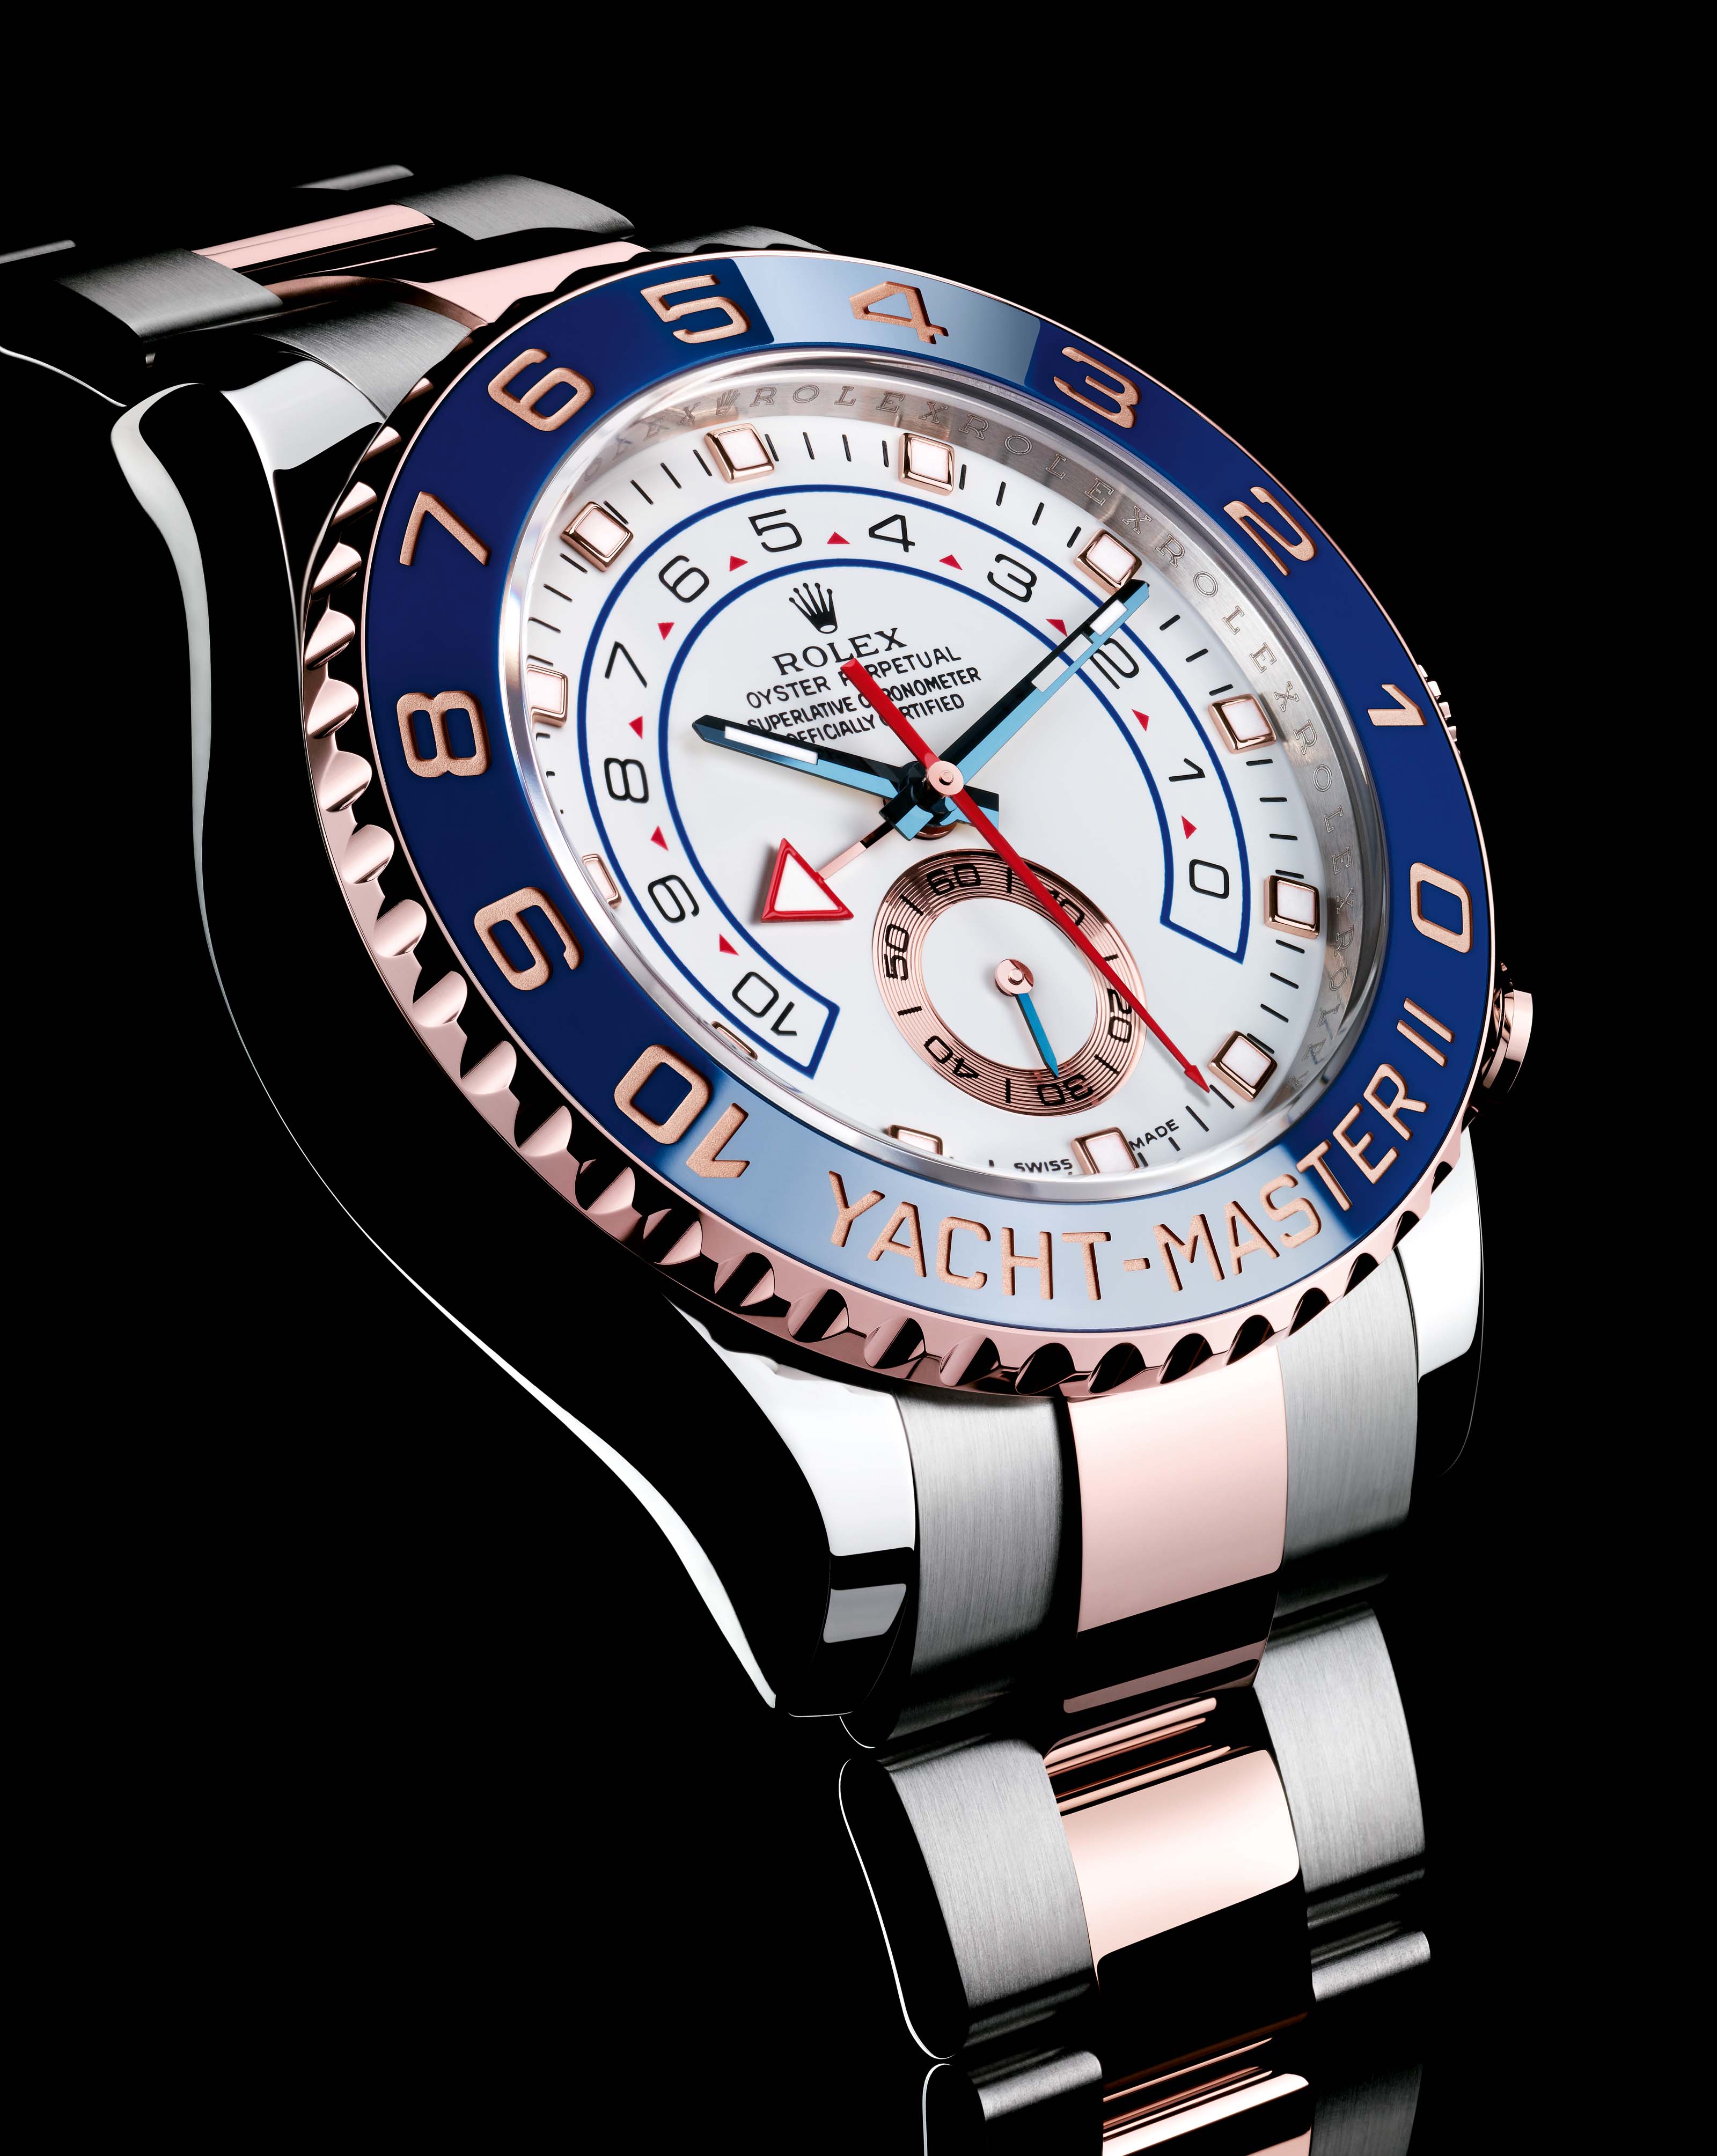 The Rolex New Yacht-Master II watch